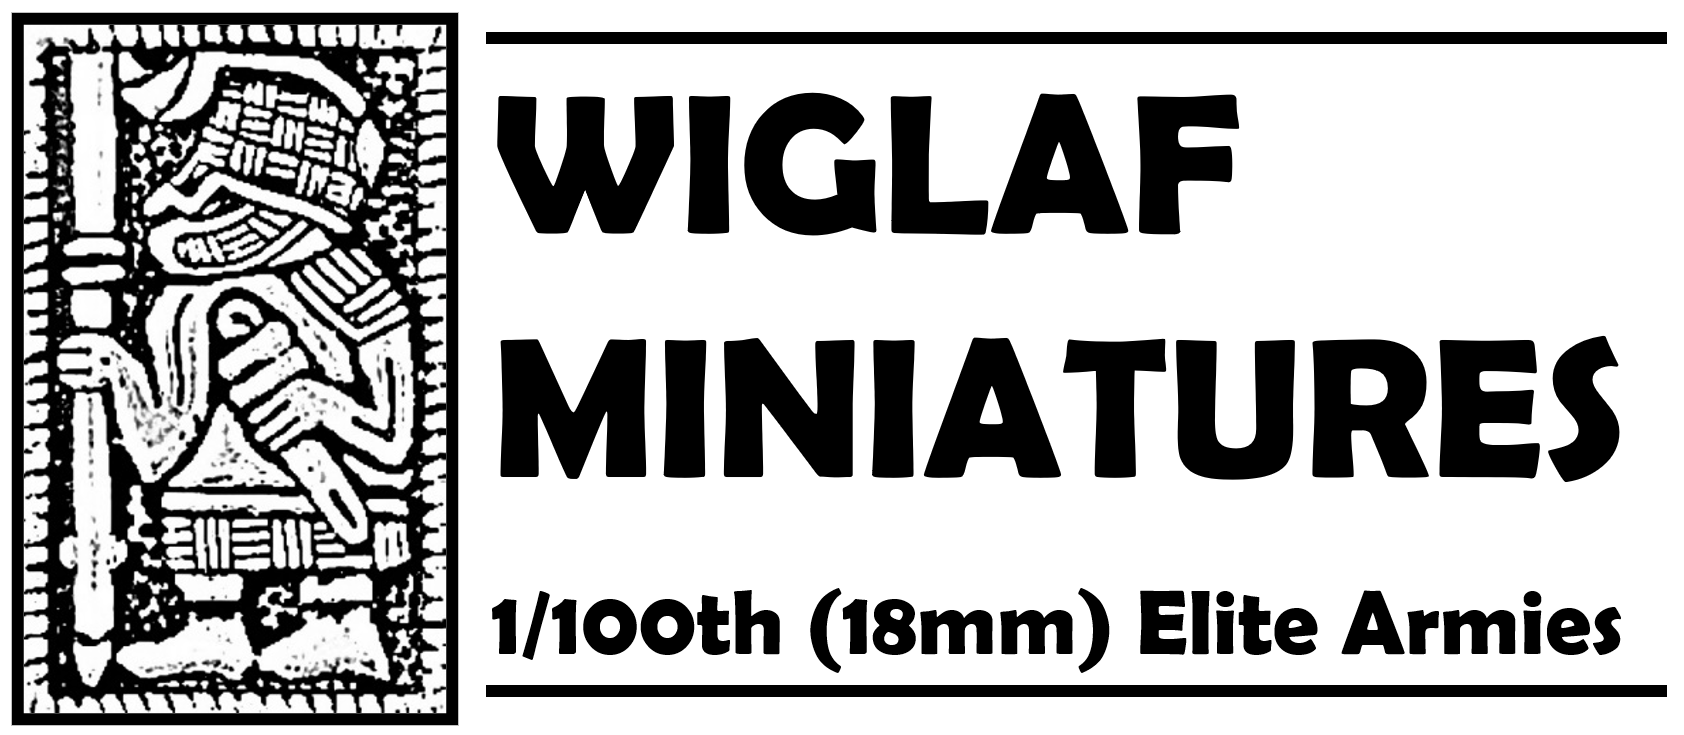 WIGLAF MINIATURES – 1/100th (18mm) Elite Armies by Daniel Mersey